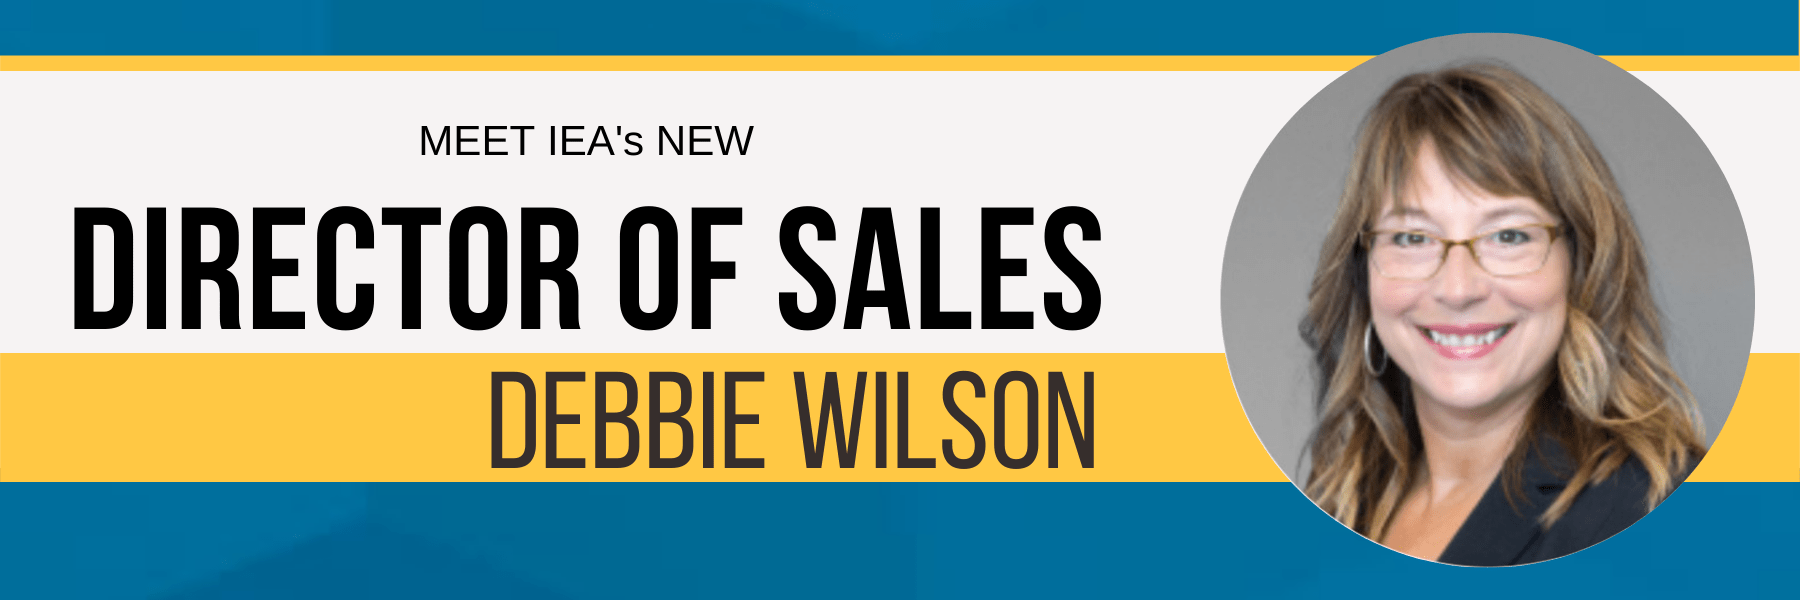 IEA Announces Debbie Wilson as New Director of Sales